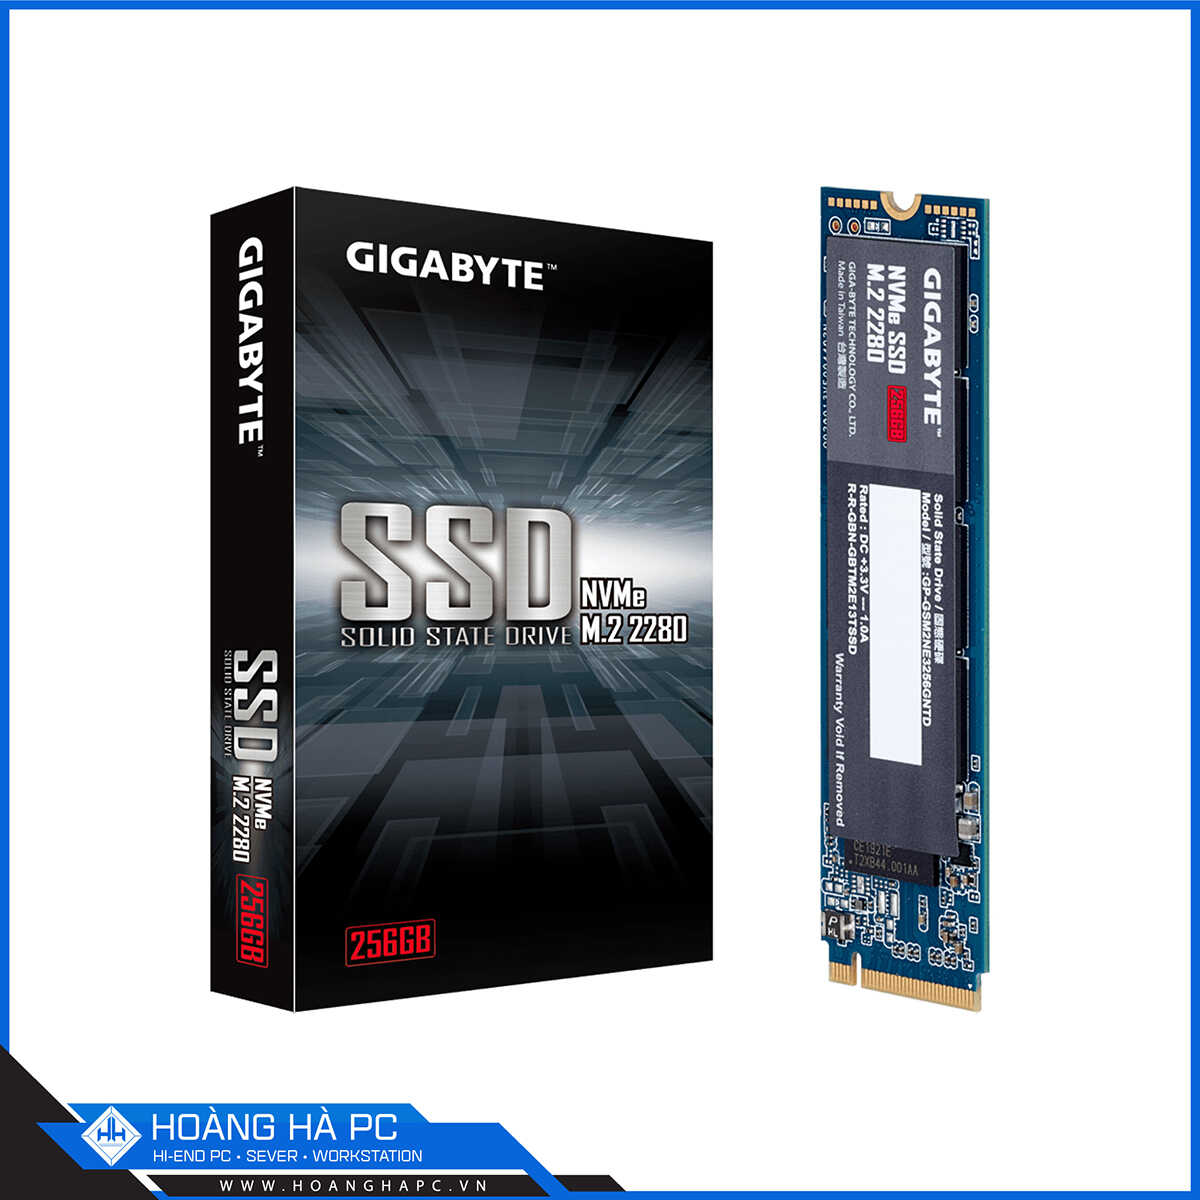 GIGABYTE NVMe SSD 256GB M.2 2280 NVMe